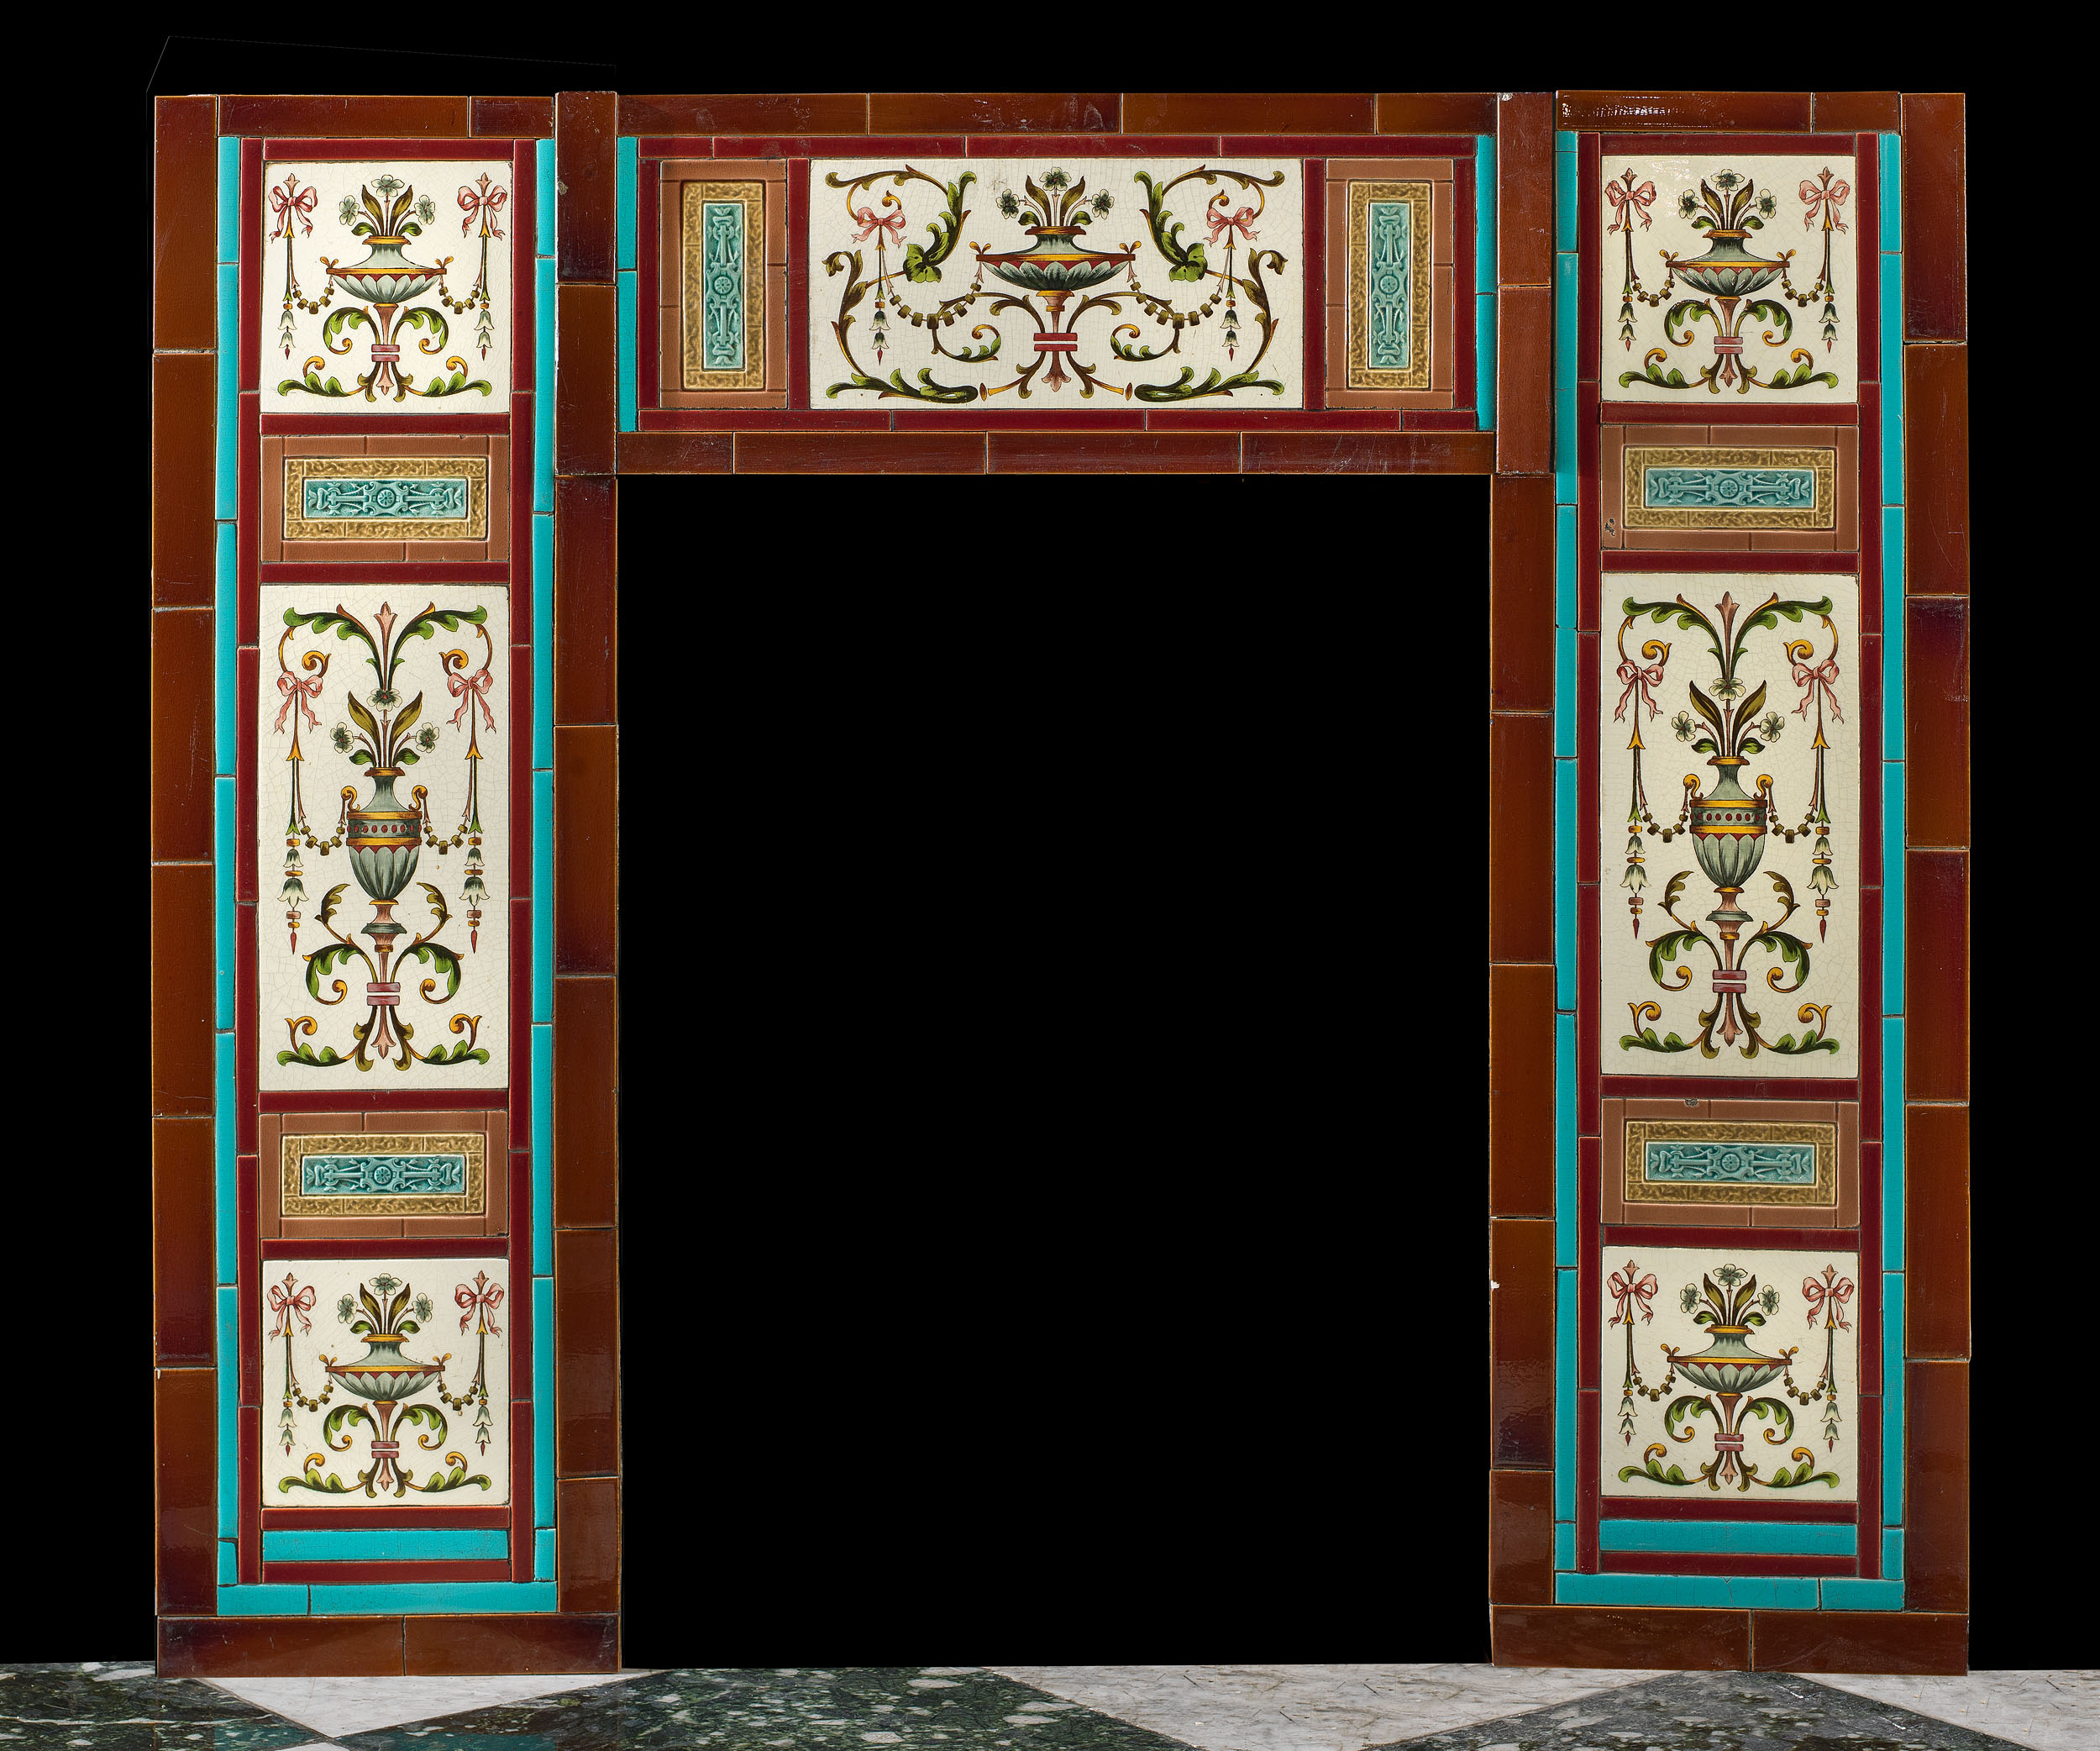 A Victorian Tiled Fireplace Interior Insert
